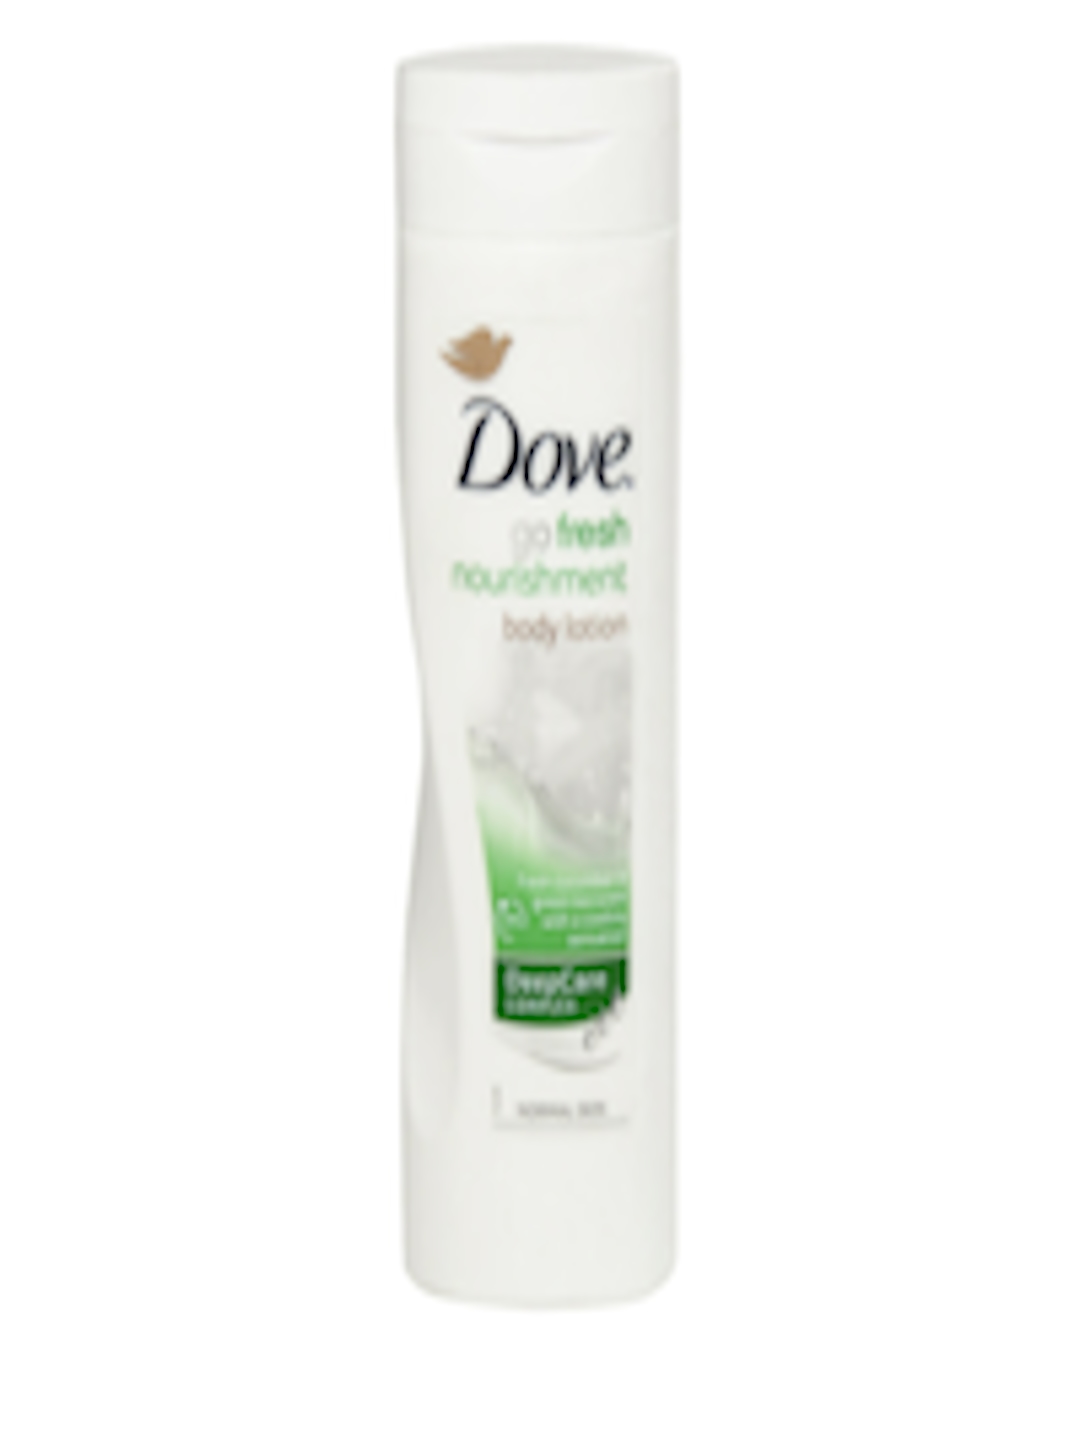 dove go fresh body lotion price